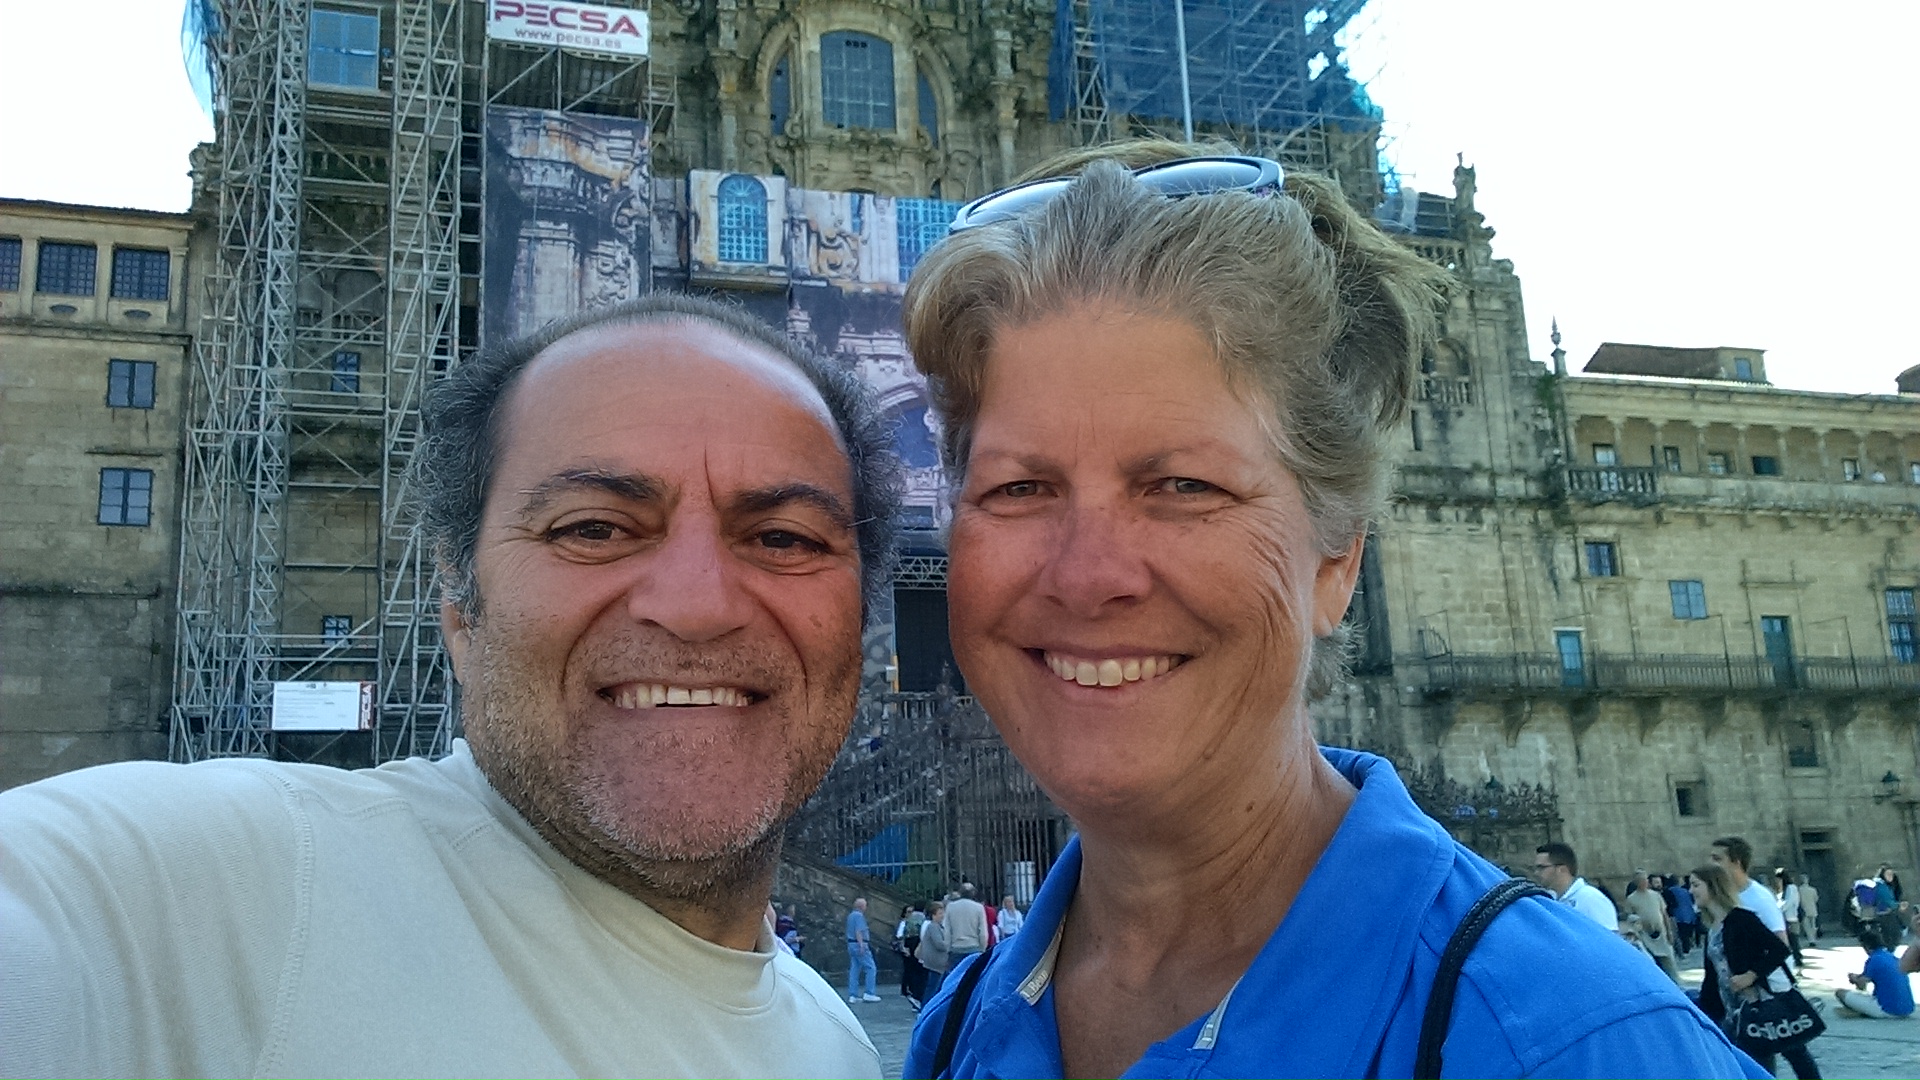 Retener Inclinado hermosa Santiago de Compostela! Day 35 - One Road at a Time